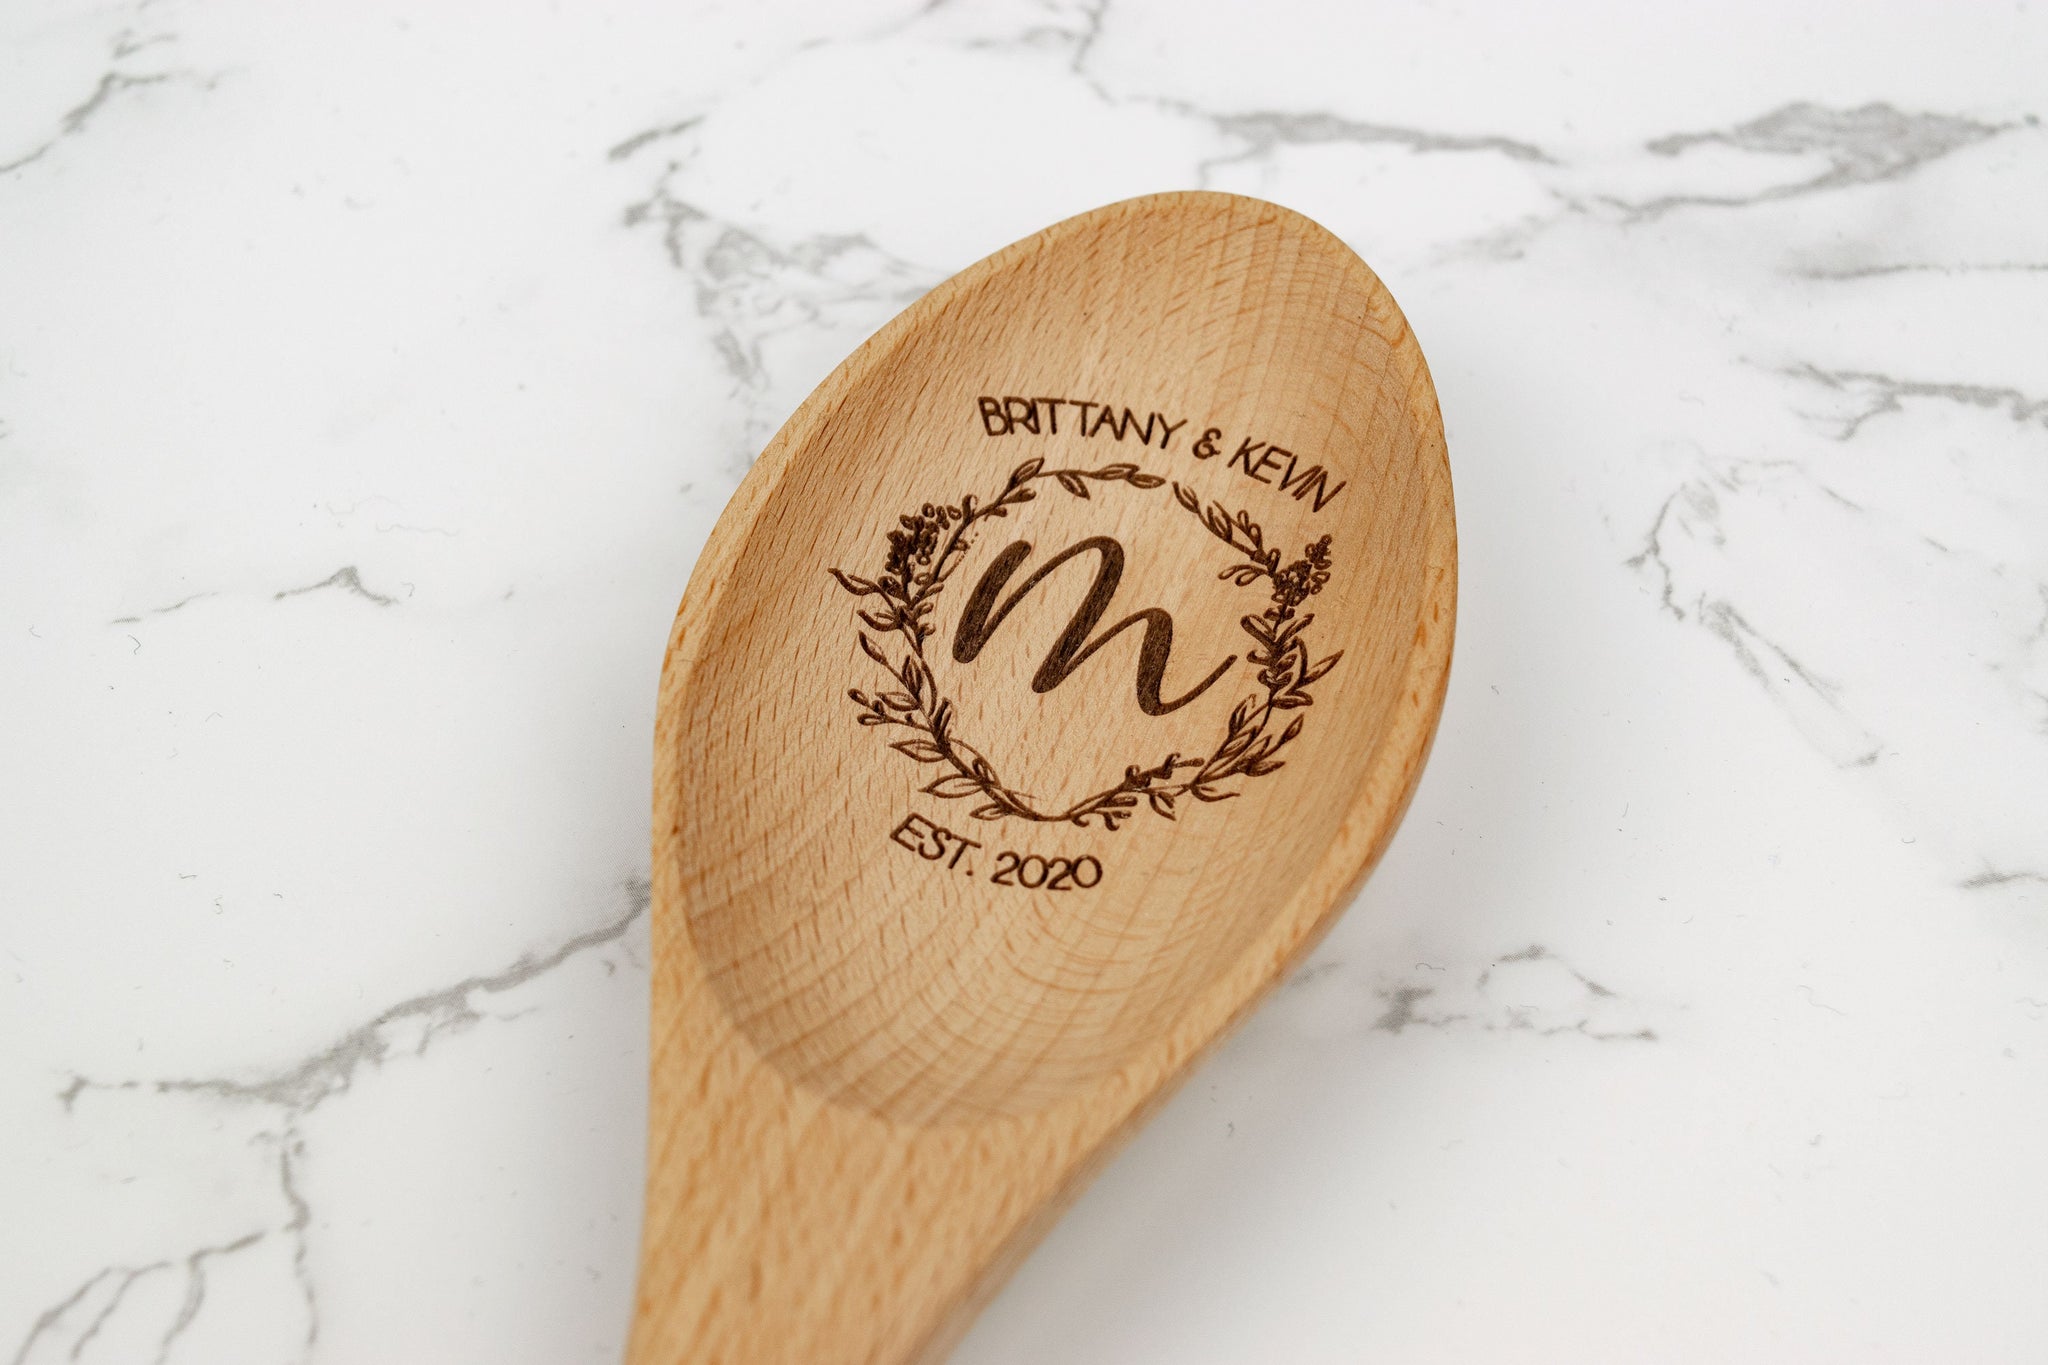 Monogram Wooden Spoon - Swirl Monogrammed Design - Personalized